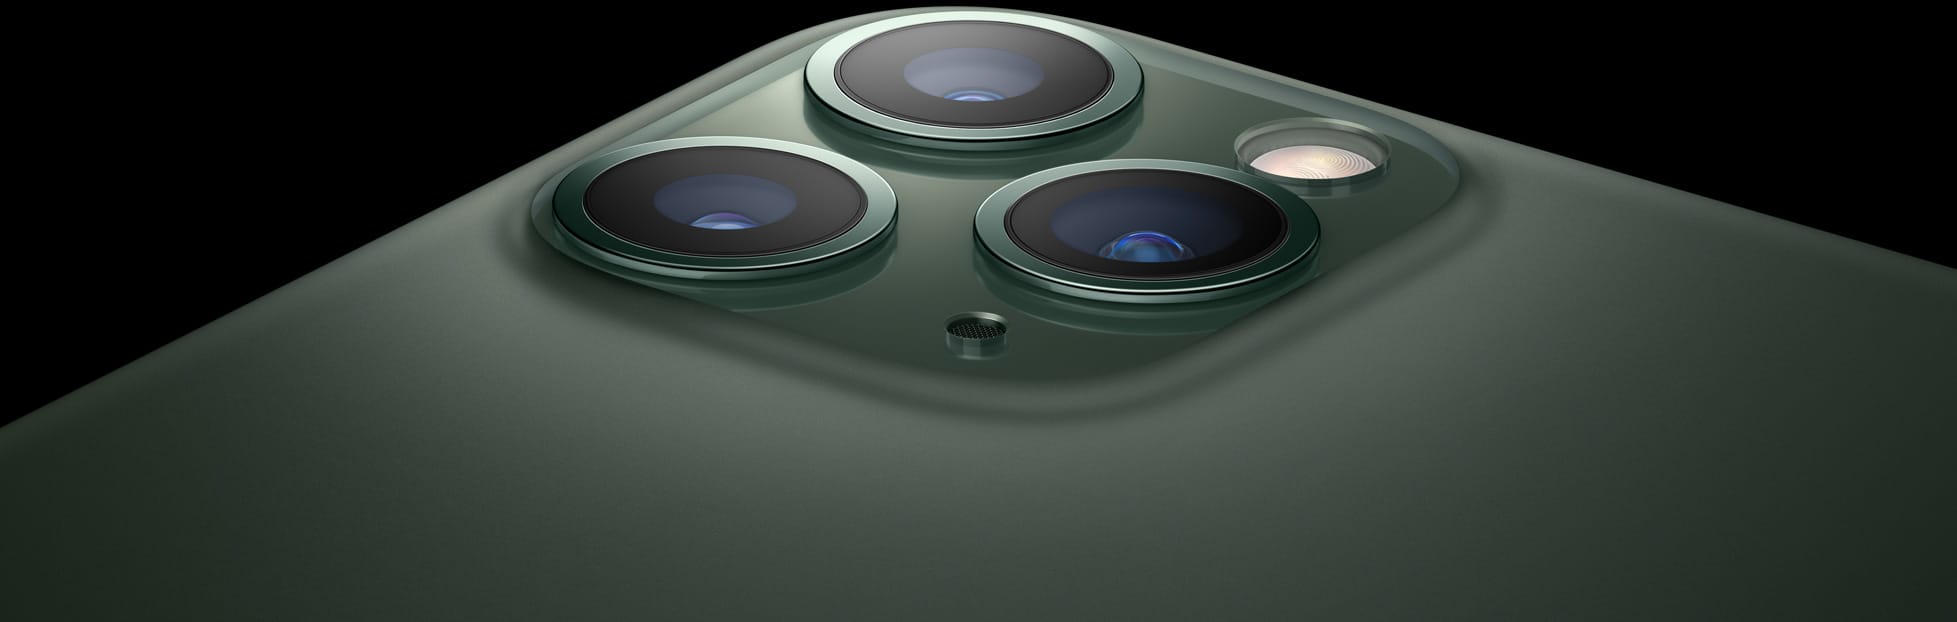 Apple iPhone 11 Pro Max 512 Gb Dual Sim (Space Gray) - камера